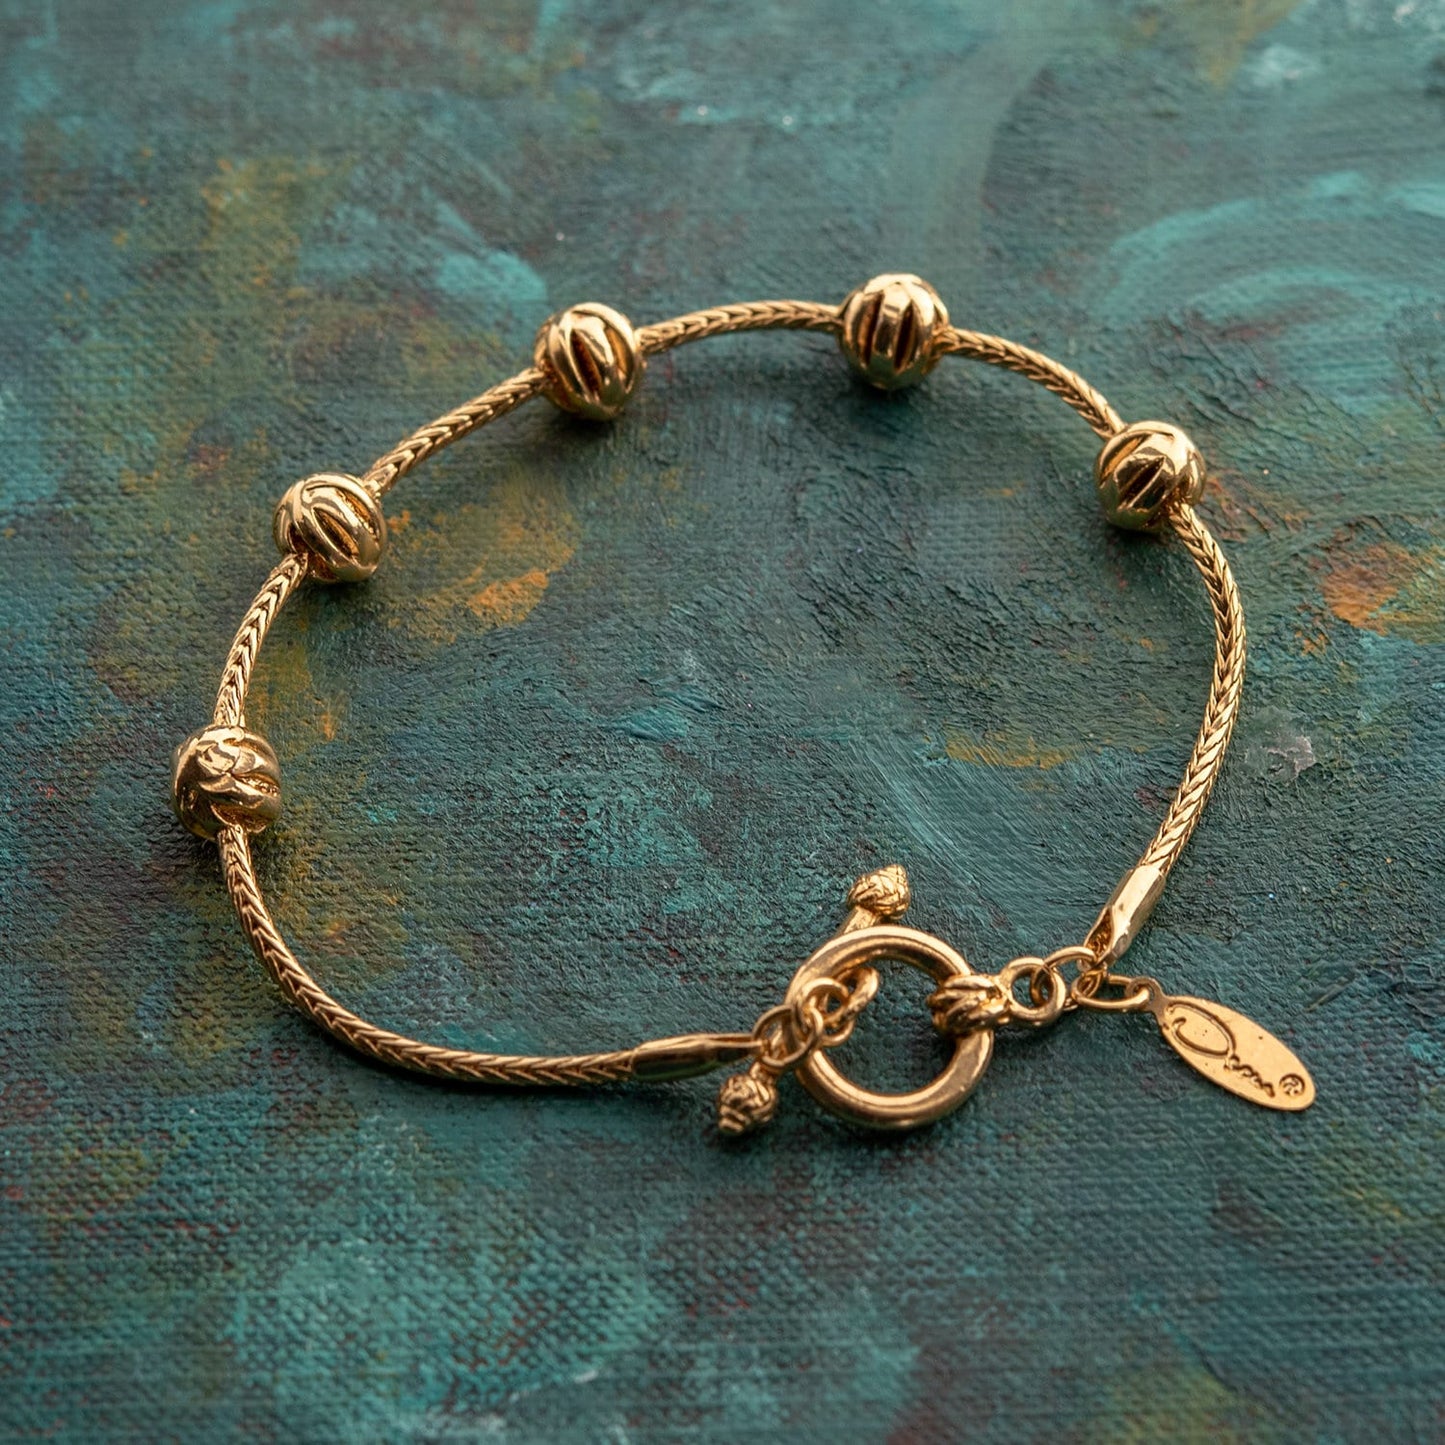 Vintage Bracelet Oscar De La Renta Gold Textured Bead and Chain Bracelet Women OSB-545 Antique Bracelet Jewelry